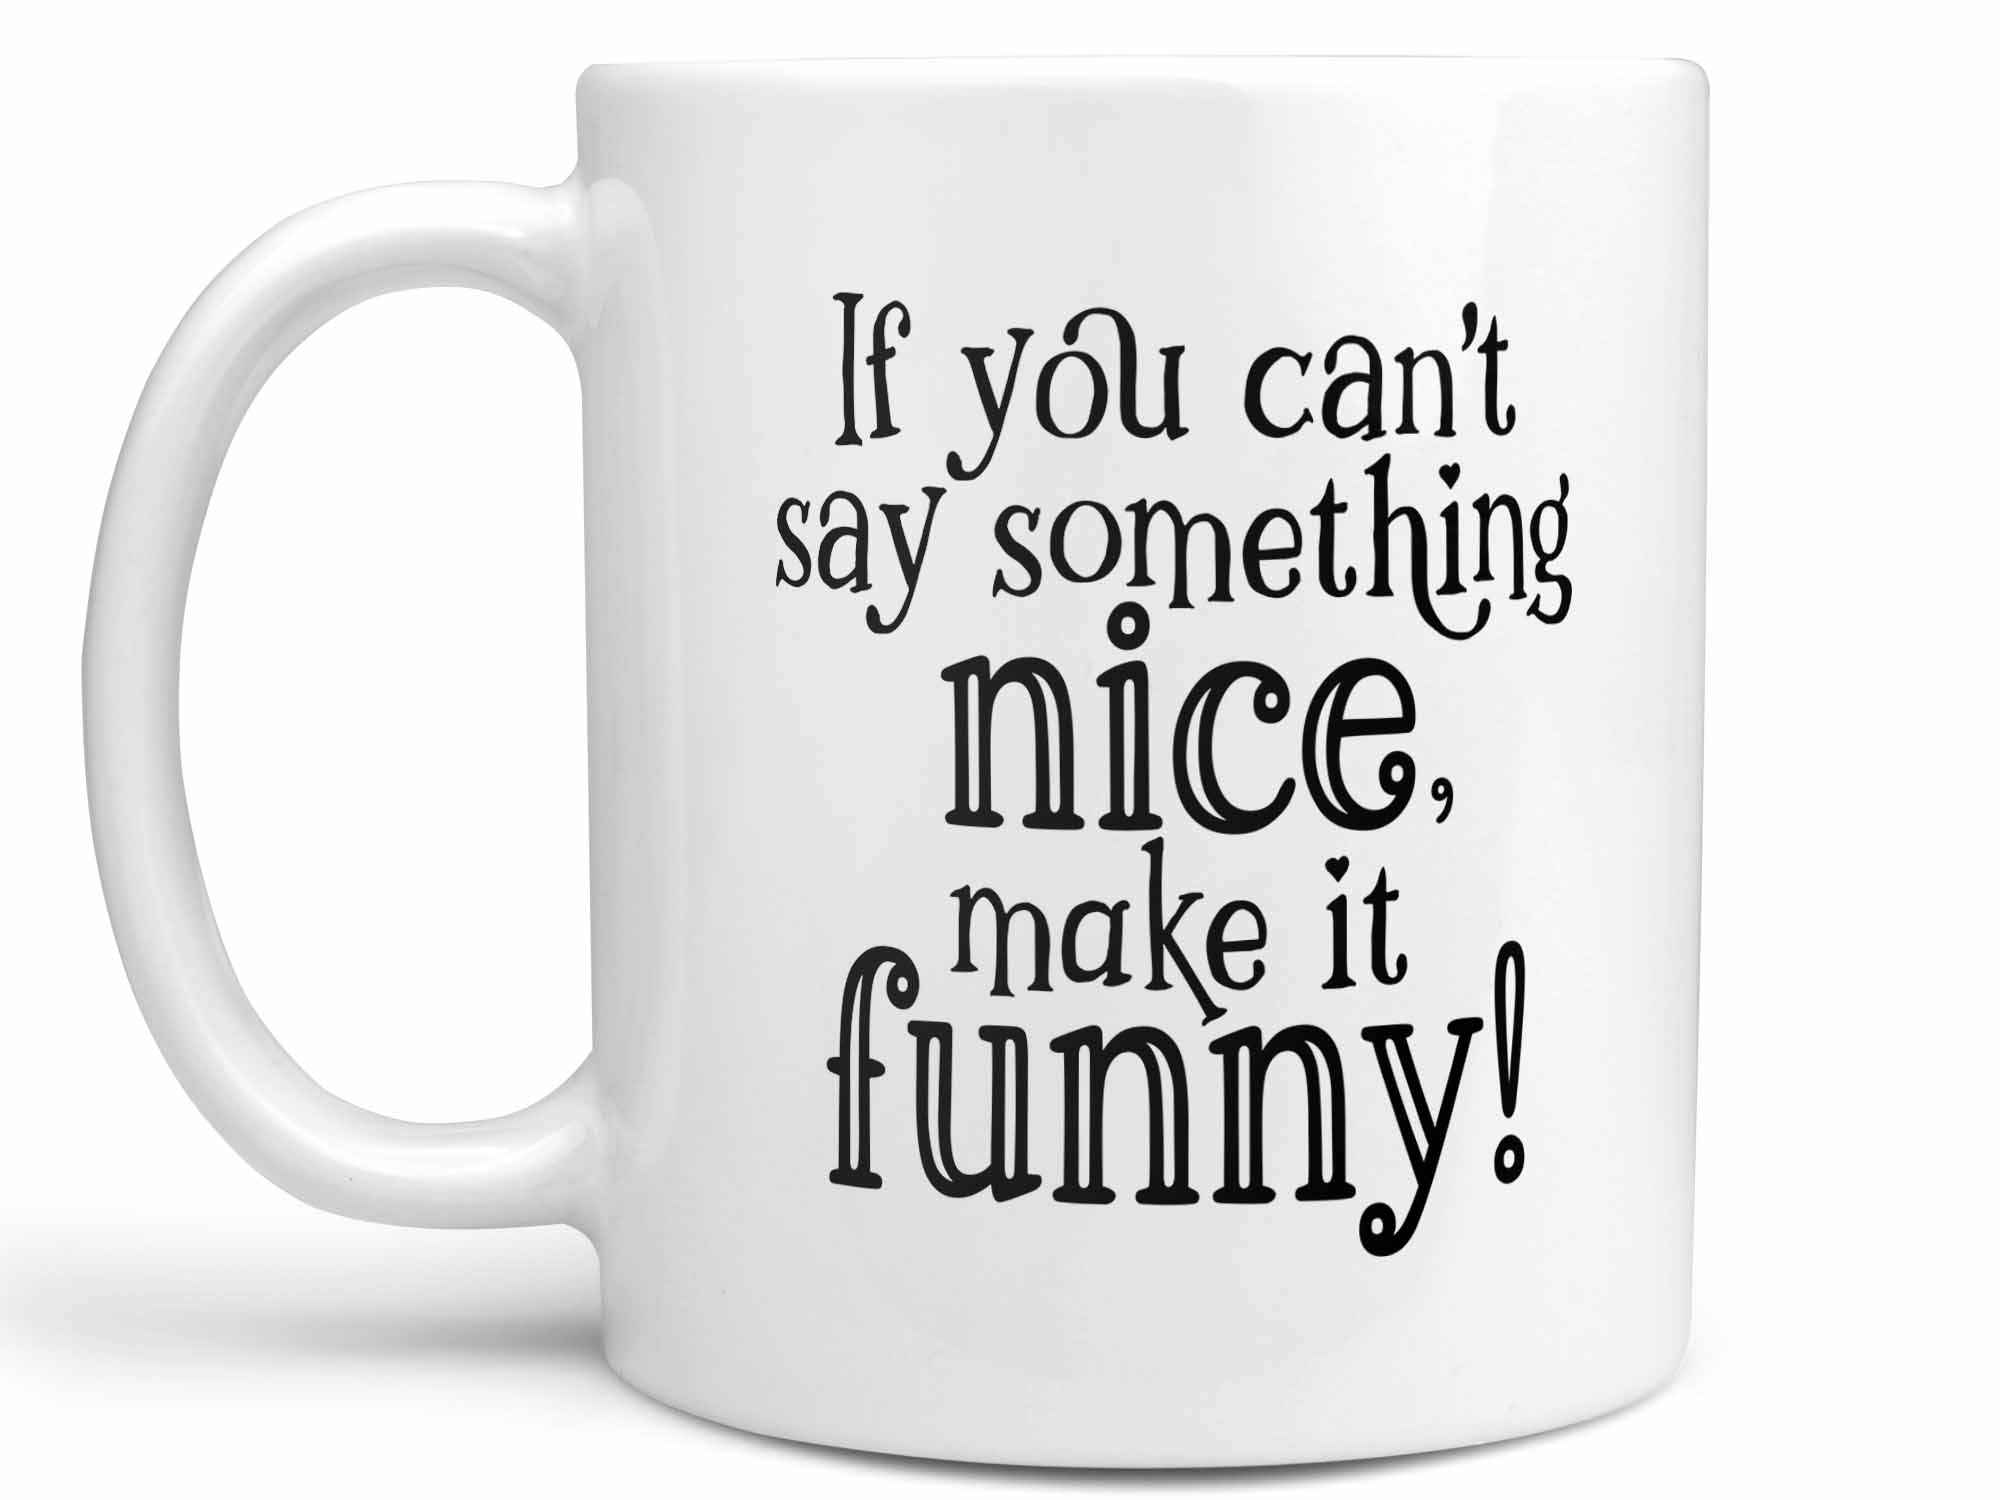 Make it Funny Coffee Mug